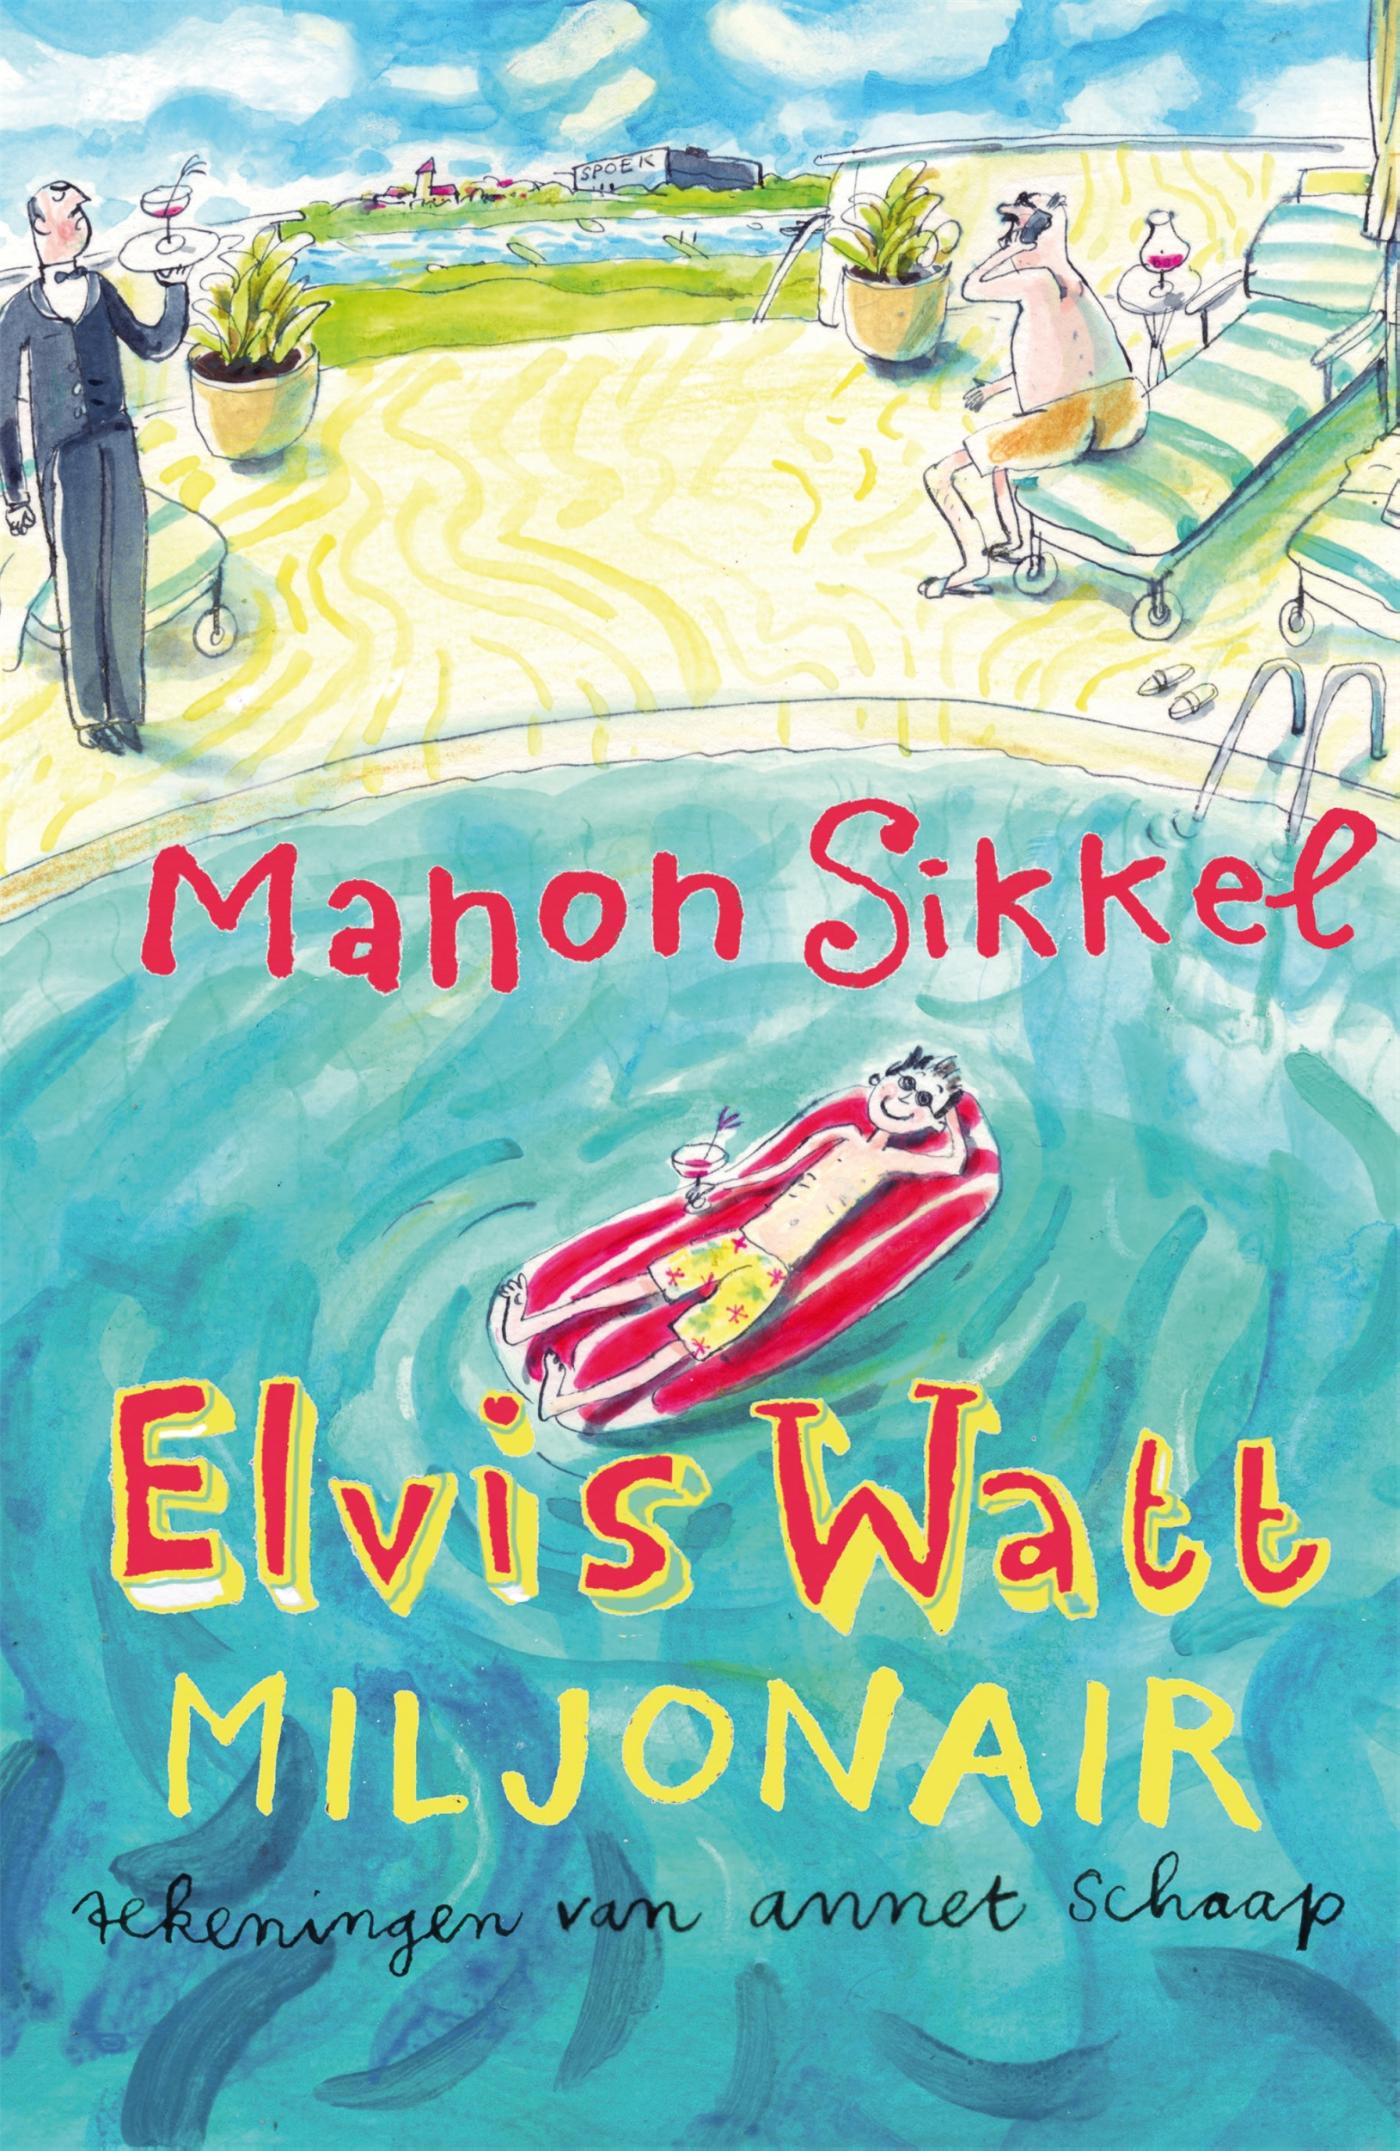 Elvis Watt, miljonair (Ebook)